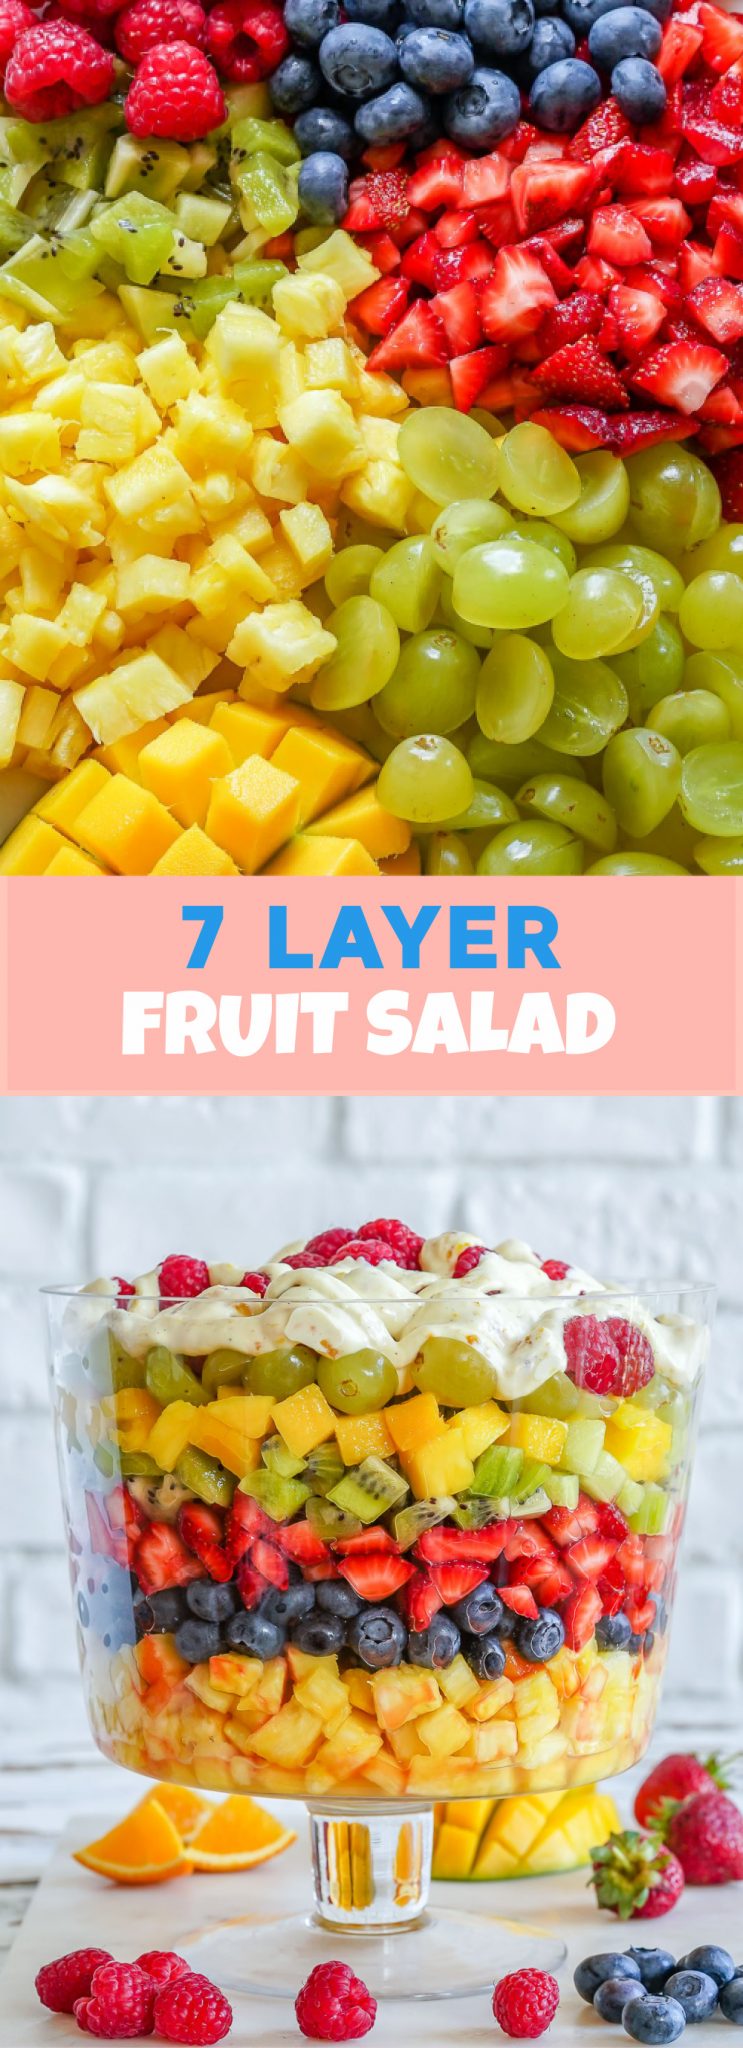 Layered Fresh Fruit Salad Recipe: How to Make It